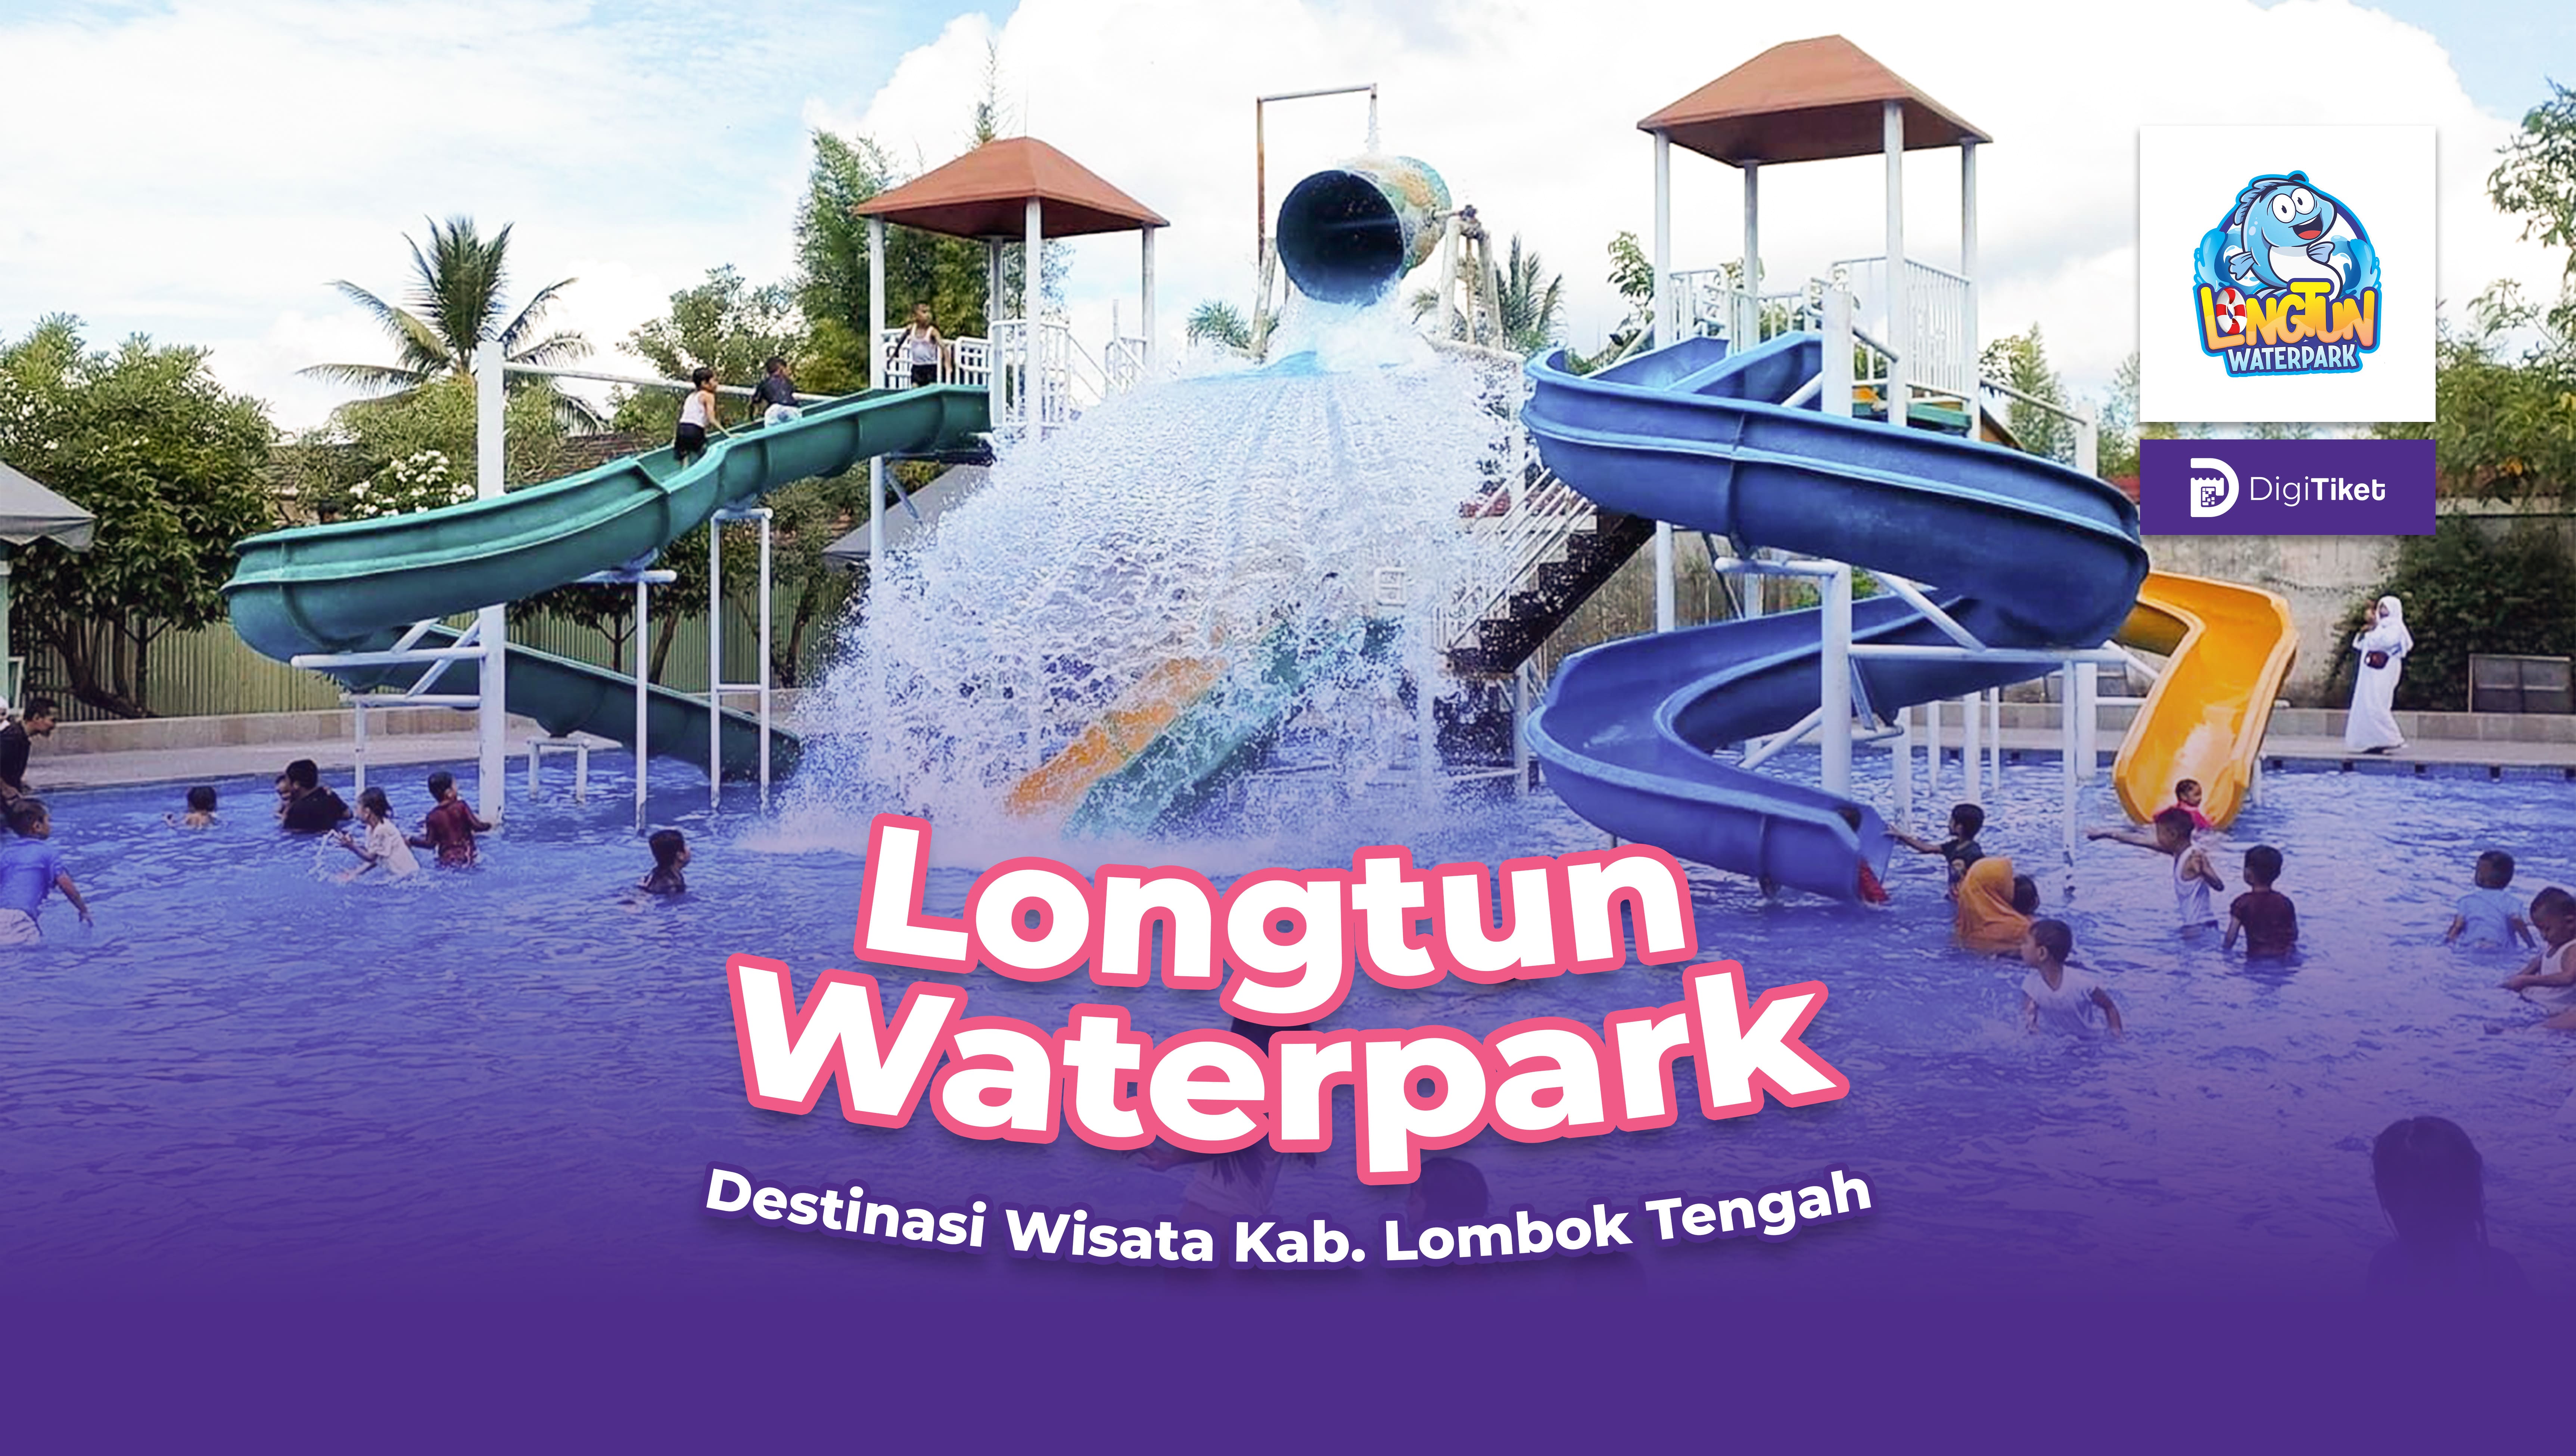 Longtun Waterpark